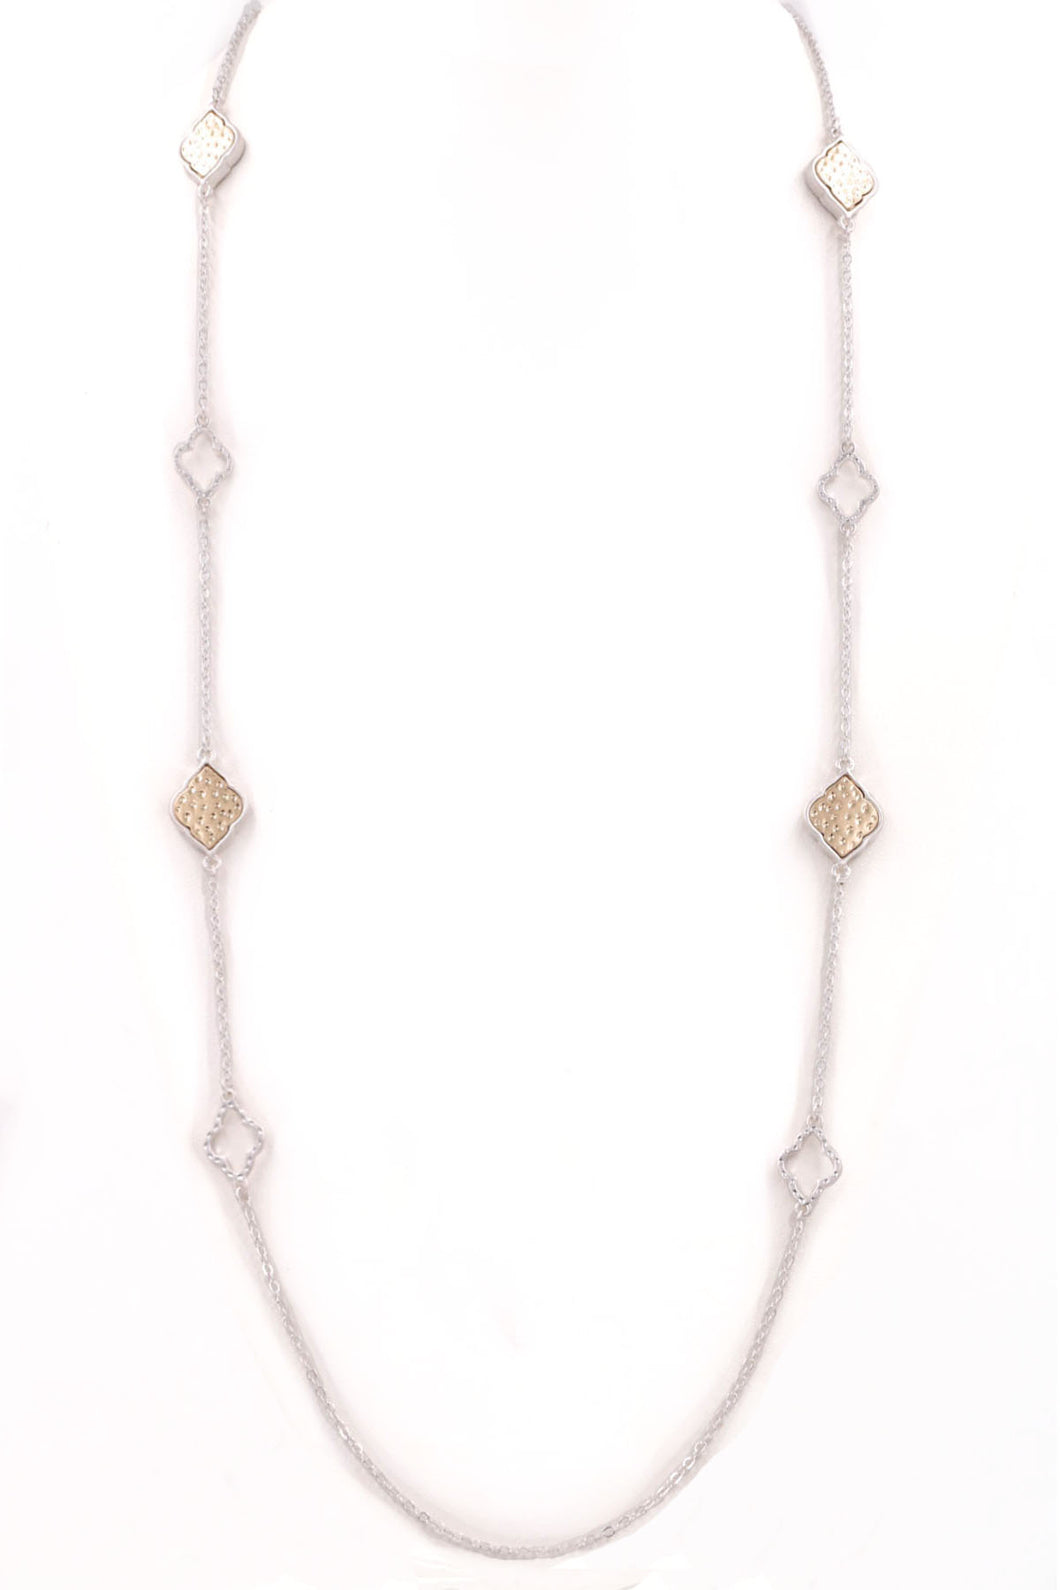 Moroccan Worn Silver Necklace